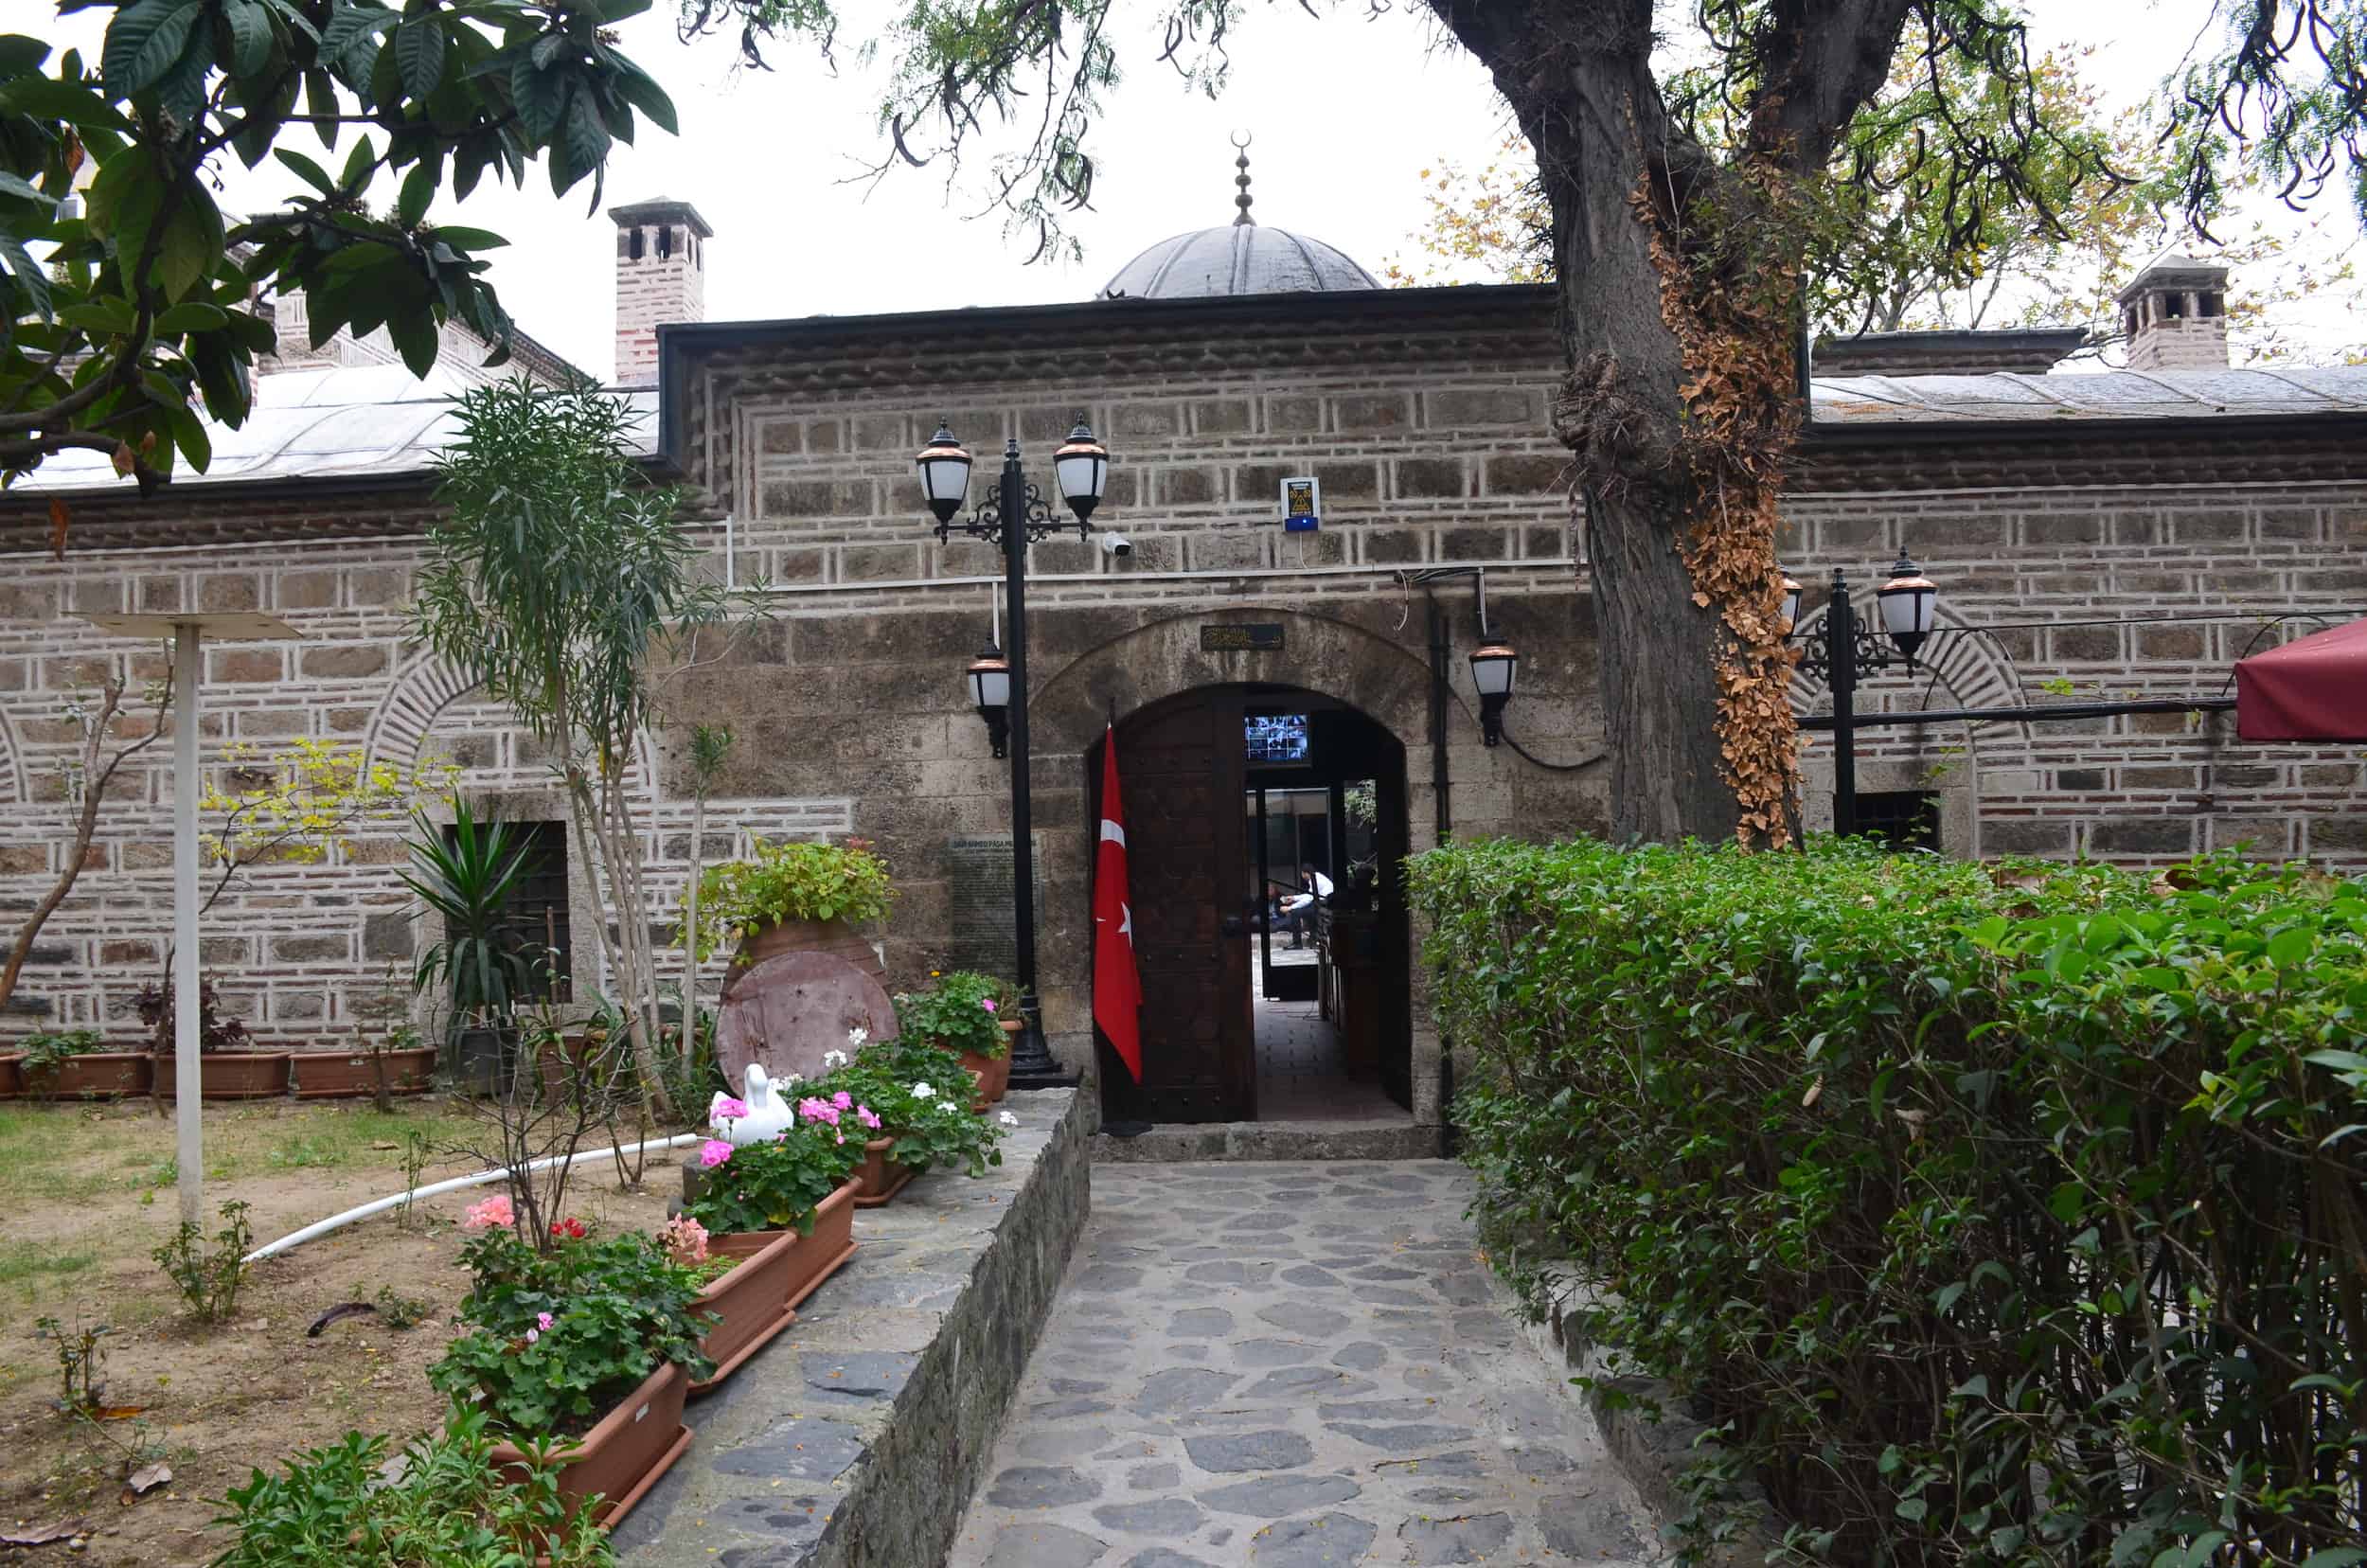 Şair Ahmed Pasha Madrasa in Muradiye, Bursa, Turkey